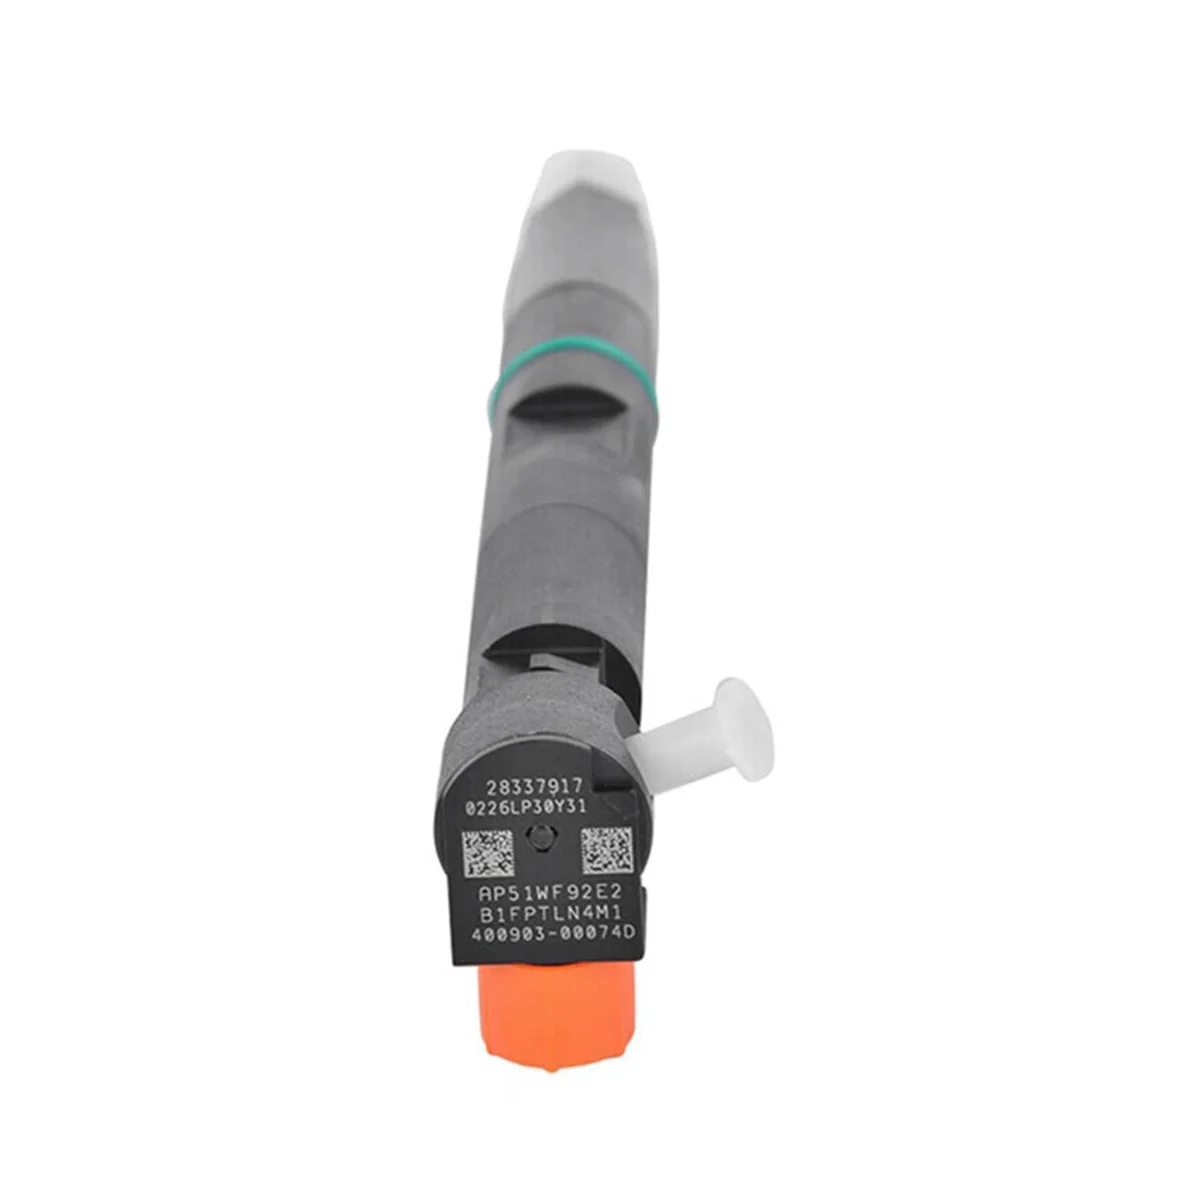 4PCS חדש Injector דלק עבור בובקט / Doosan Teir 4 די. 18 & D24 28337917 400903-00074D - 5